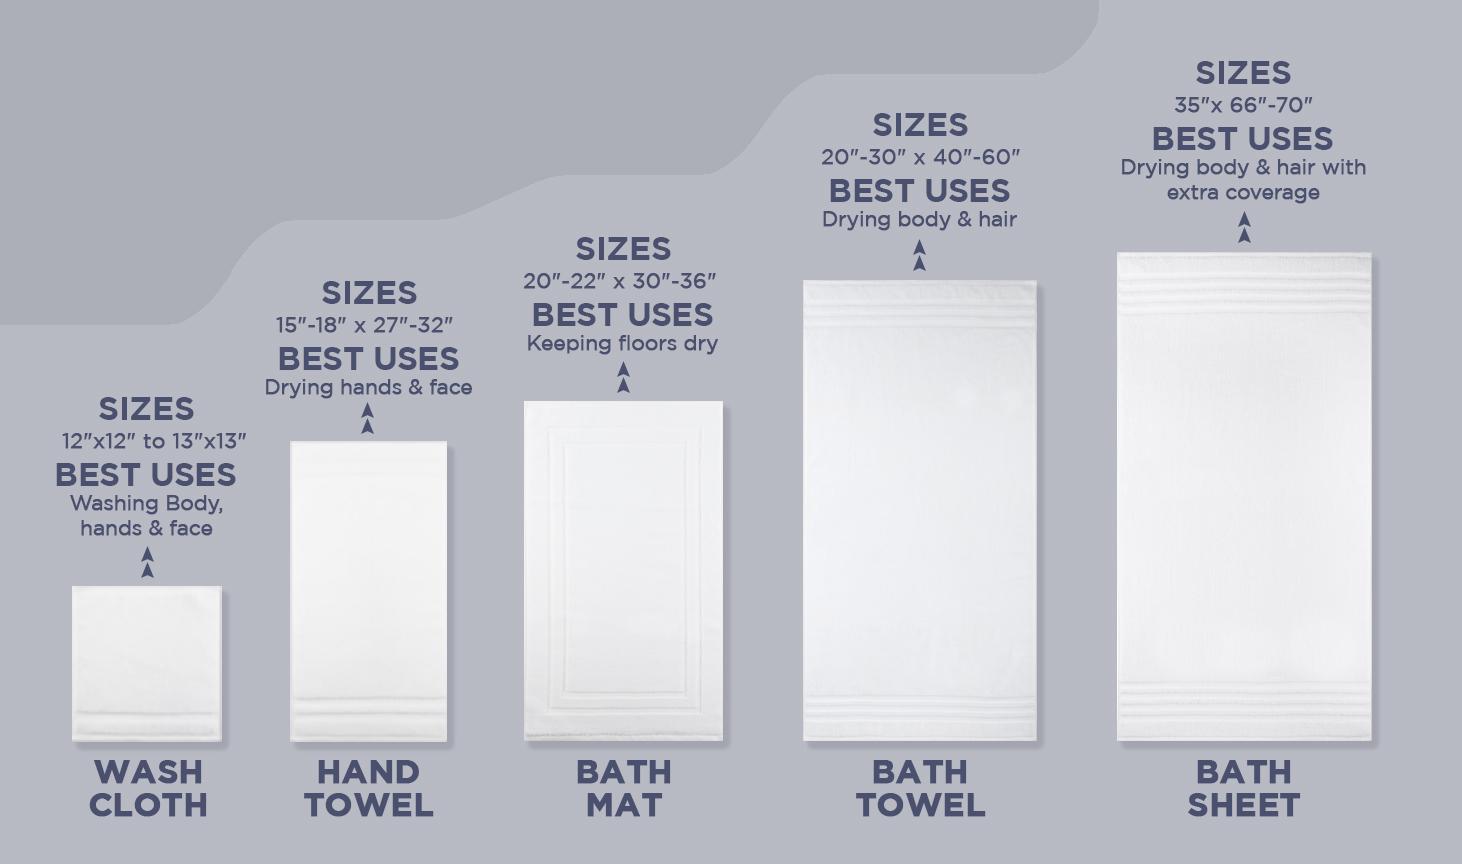 Towel Size Chart